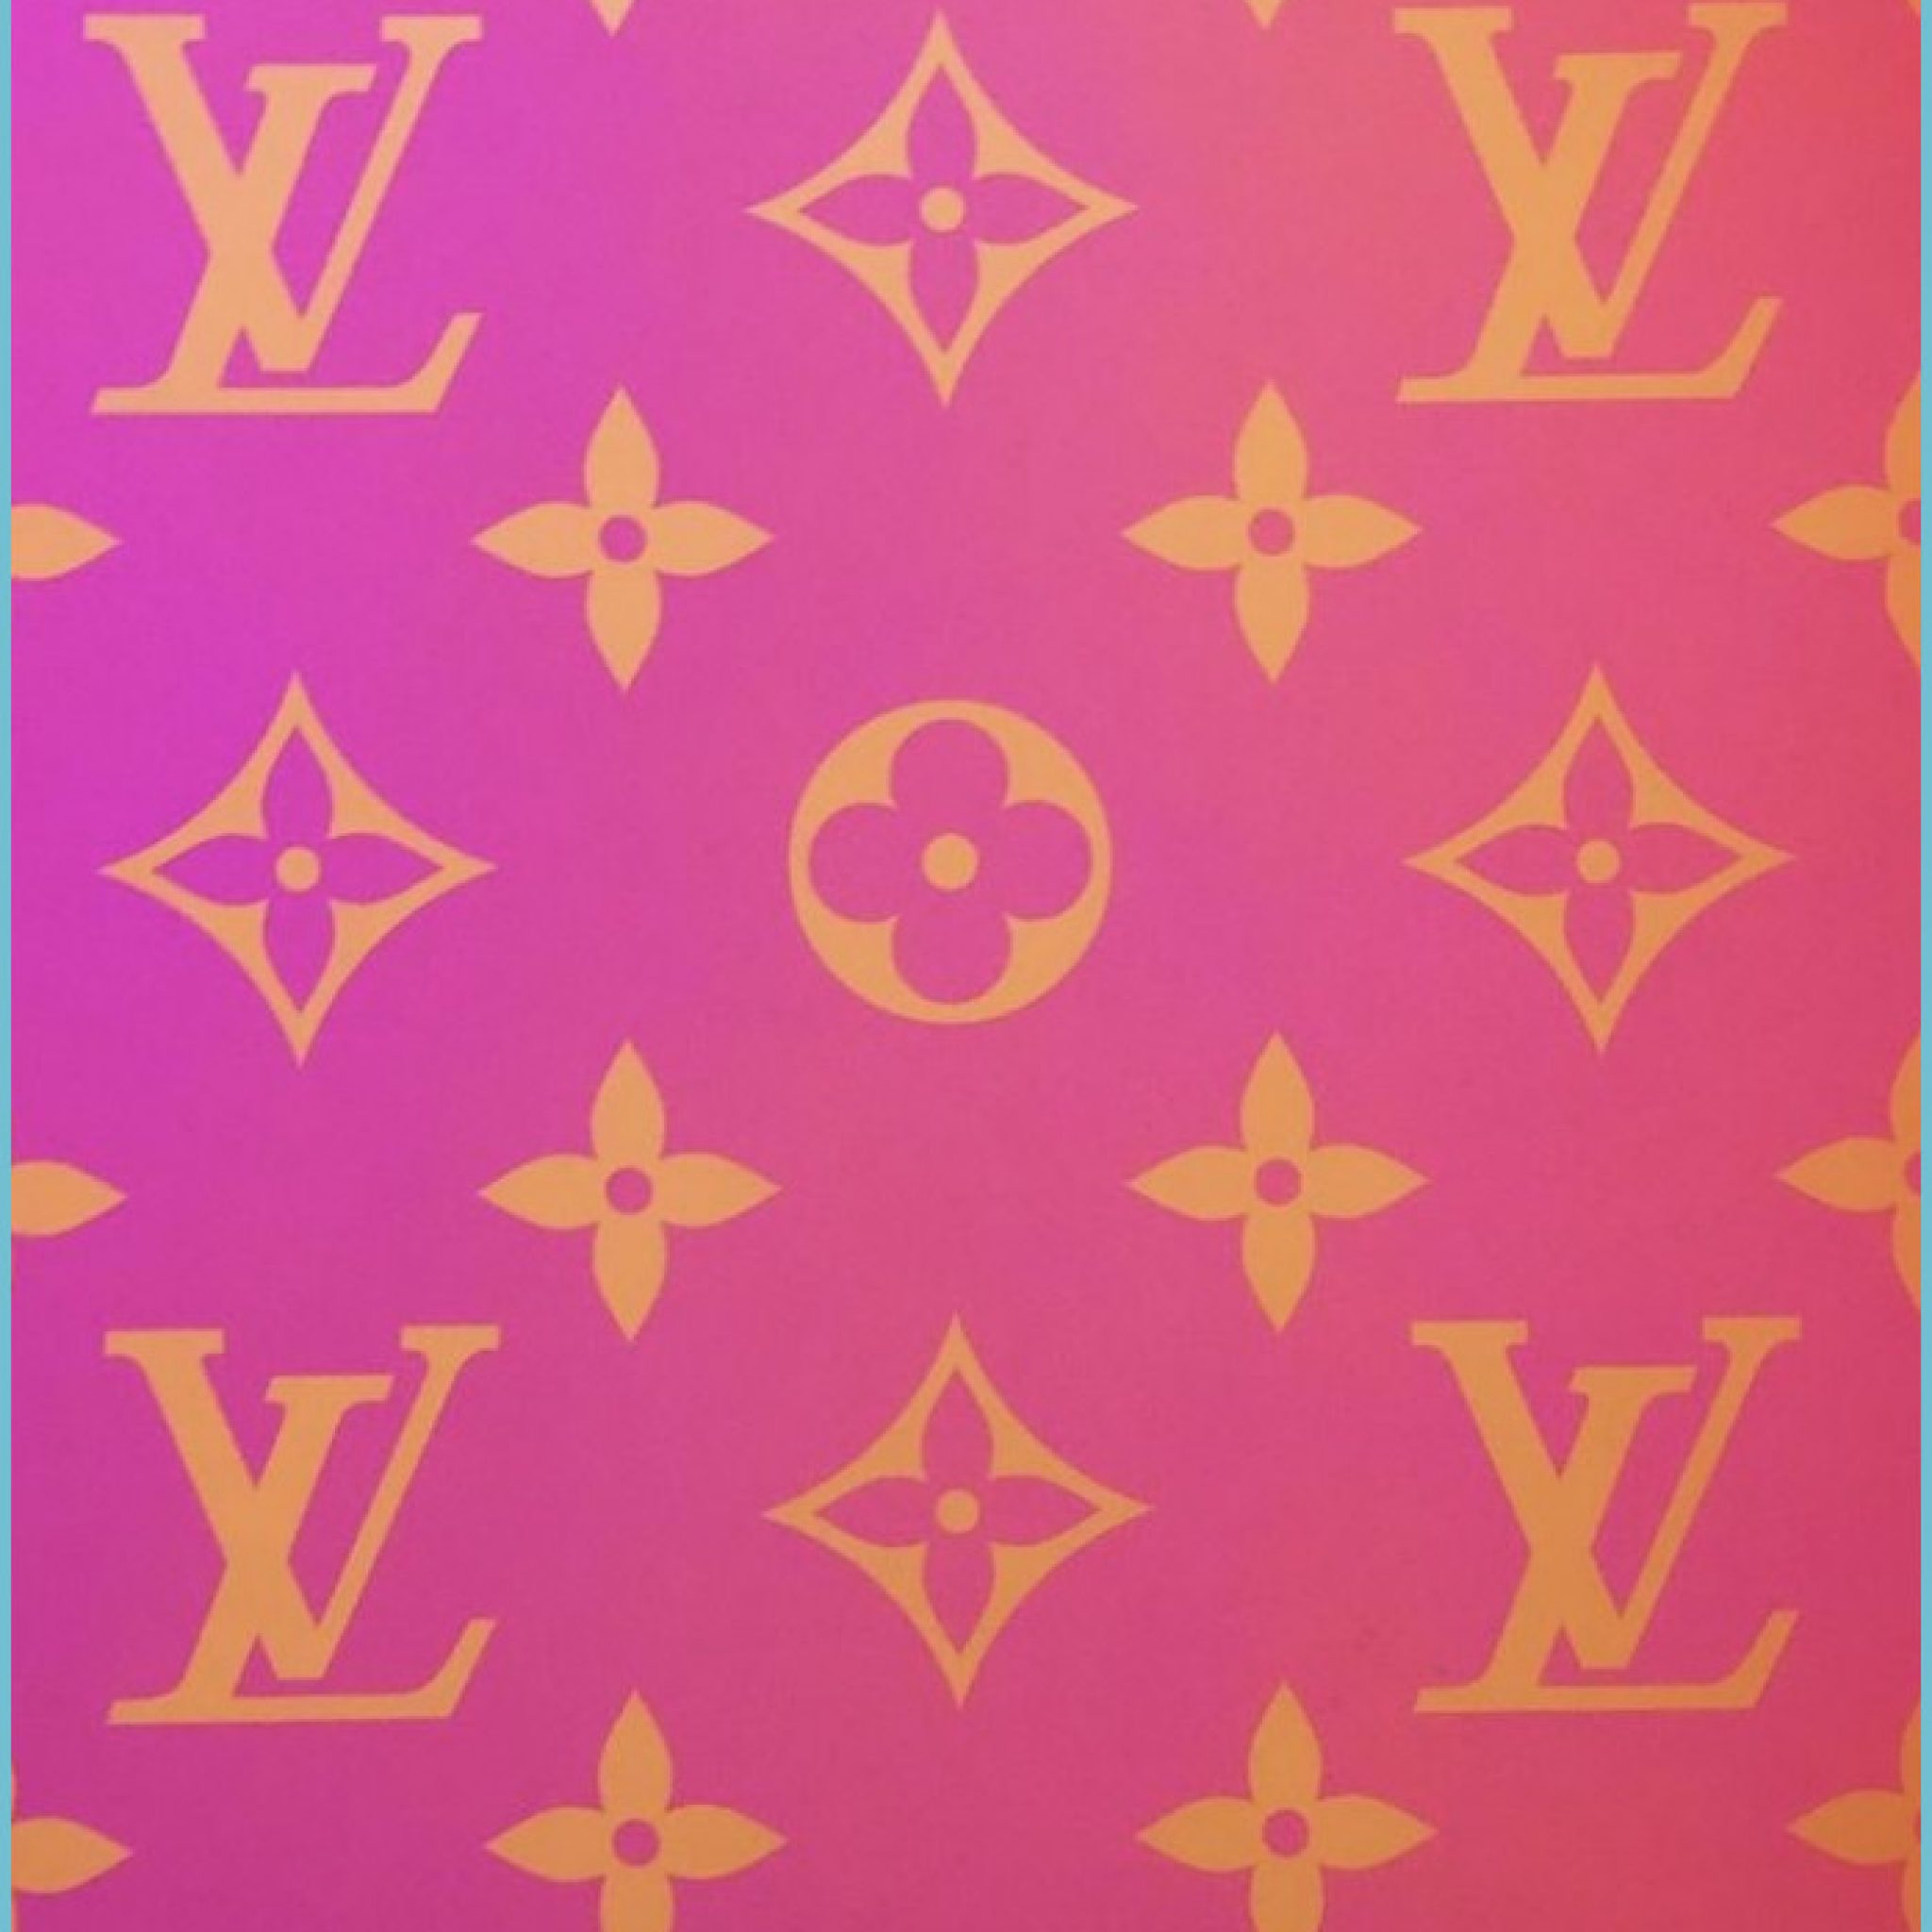 Louis Vuitton Rose Gold Wallpapers